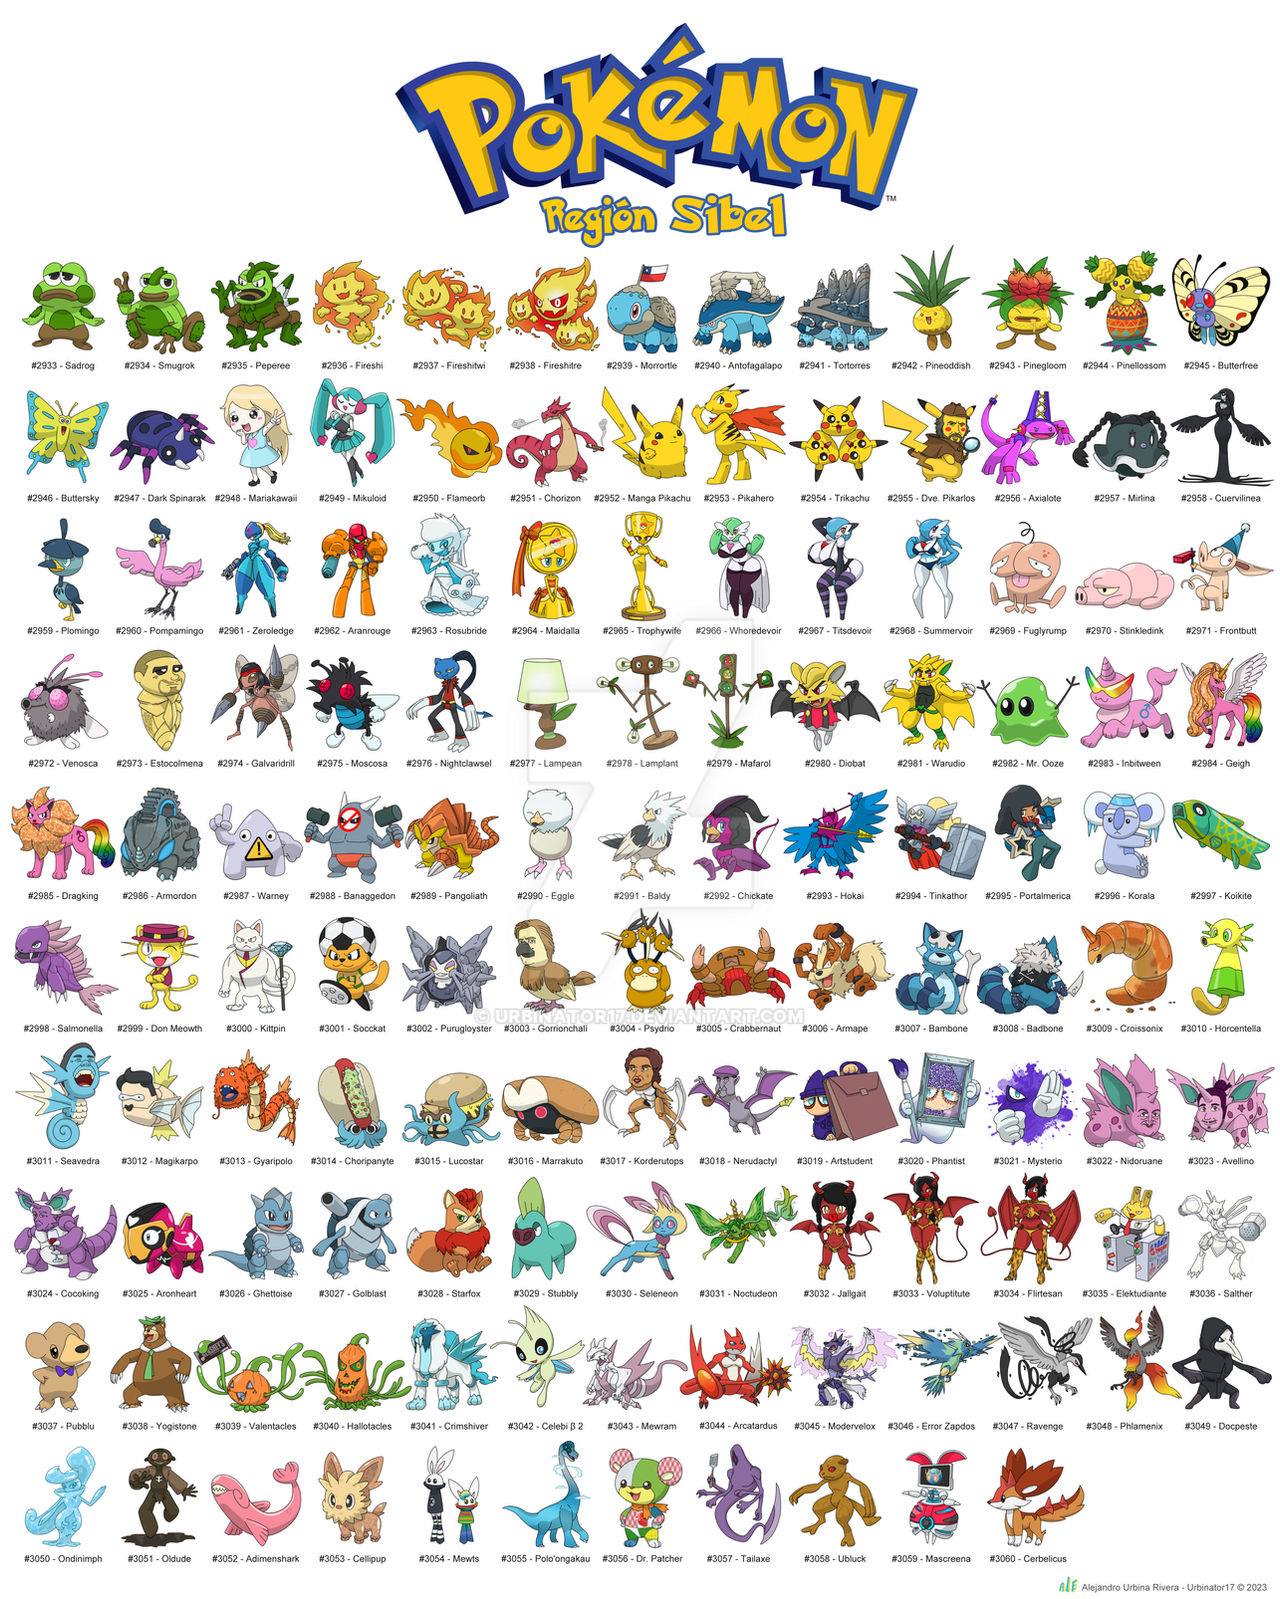 Pokemon 4207 Unown G Pokedex: Evolution, Moves, Location, Stats